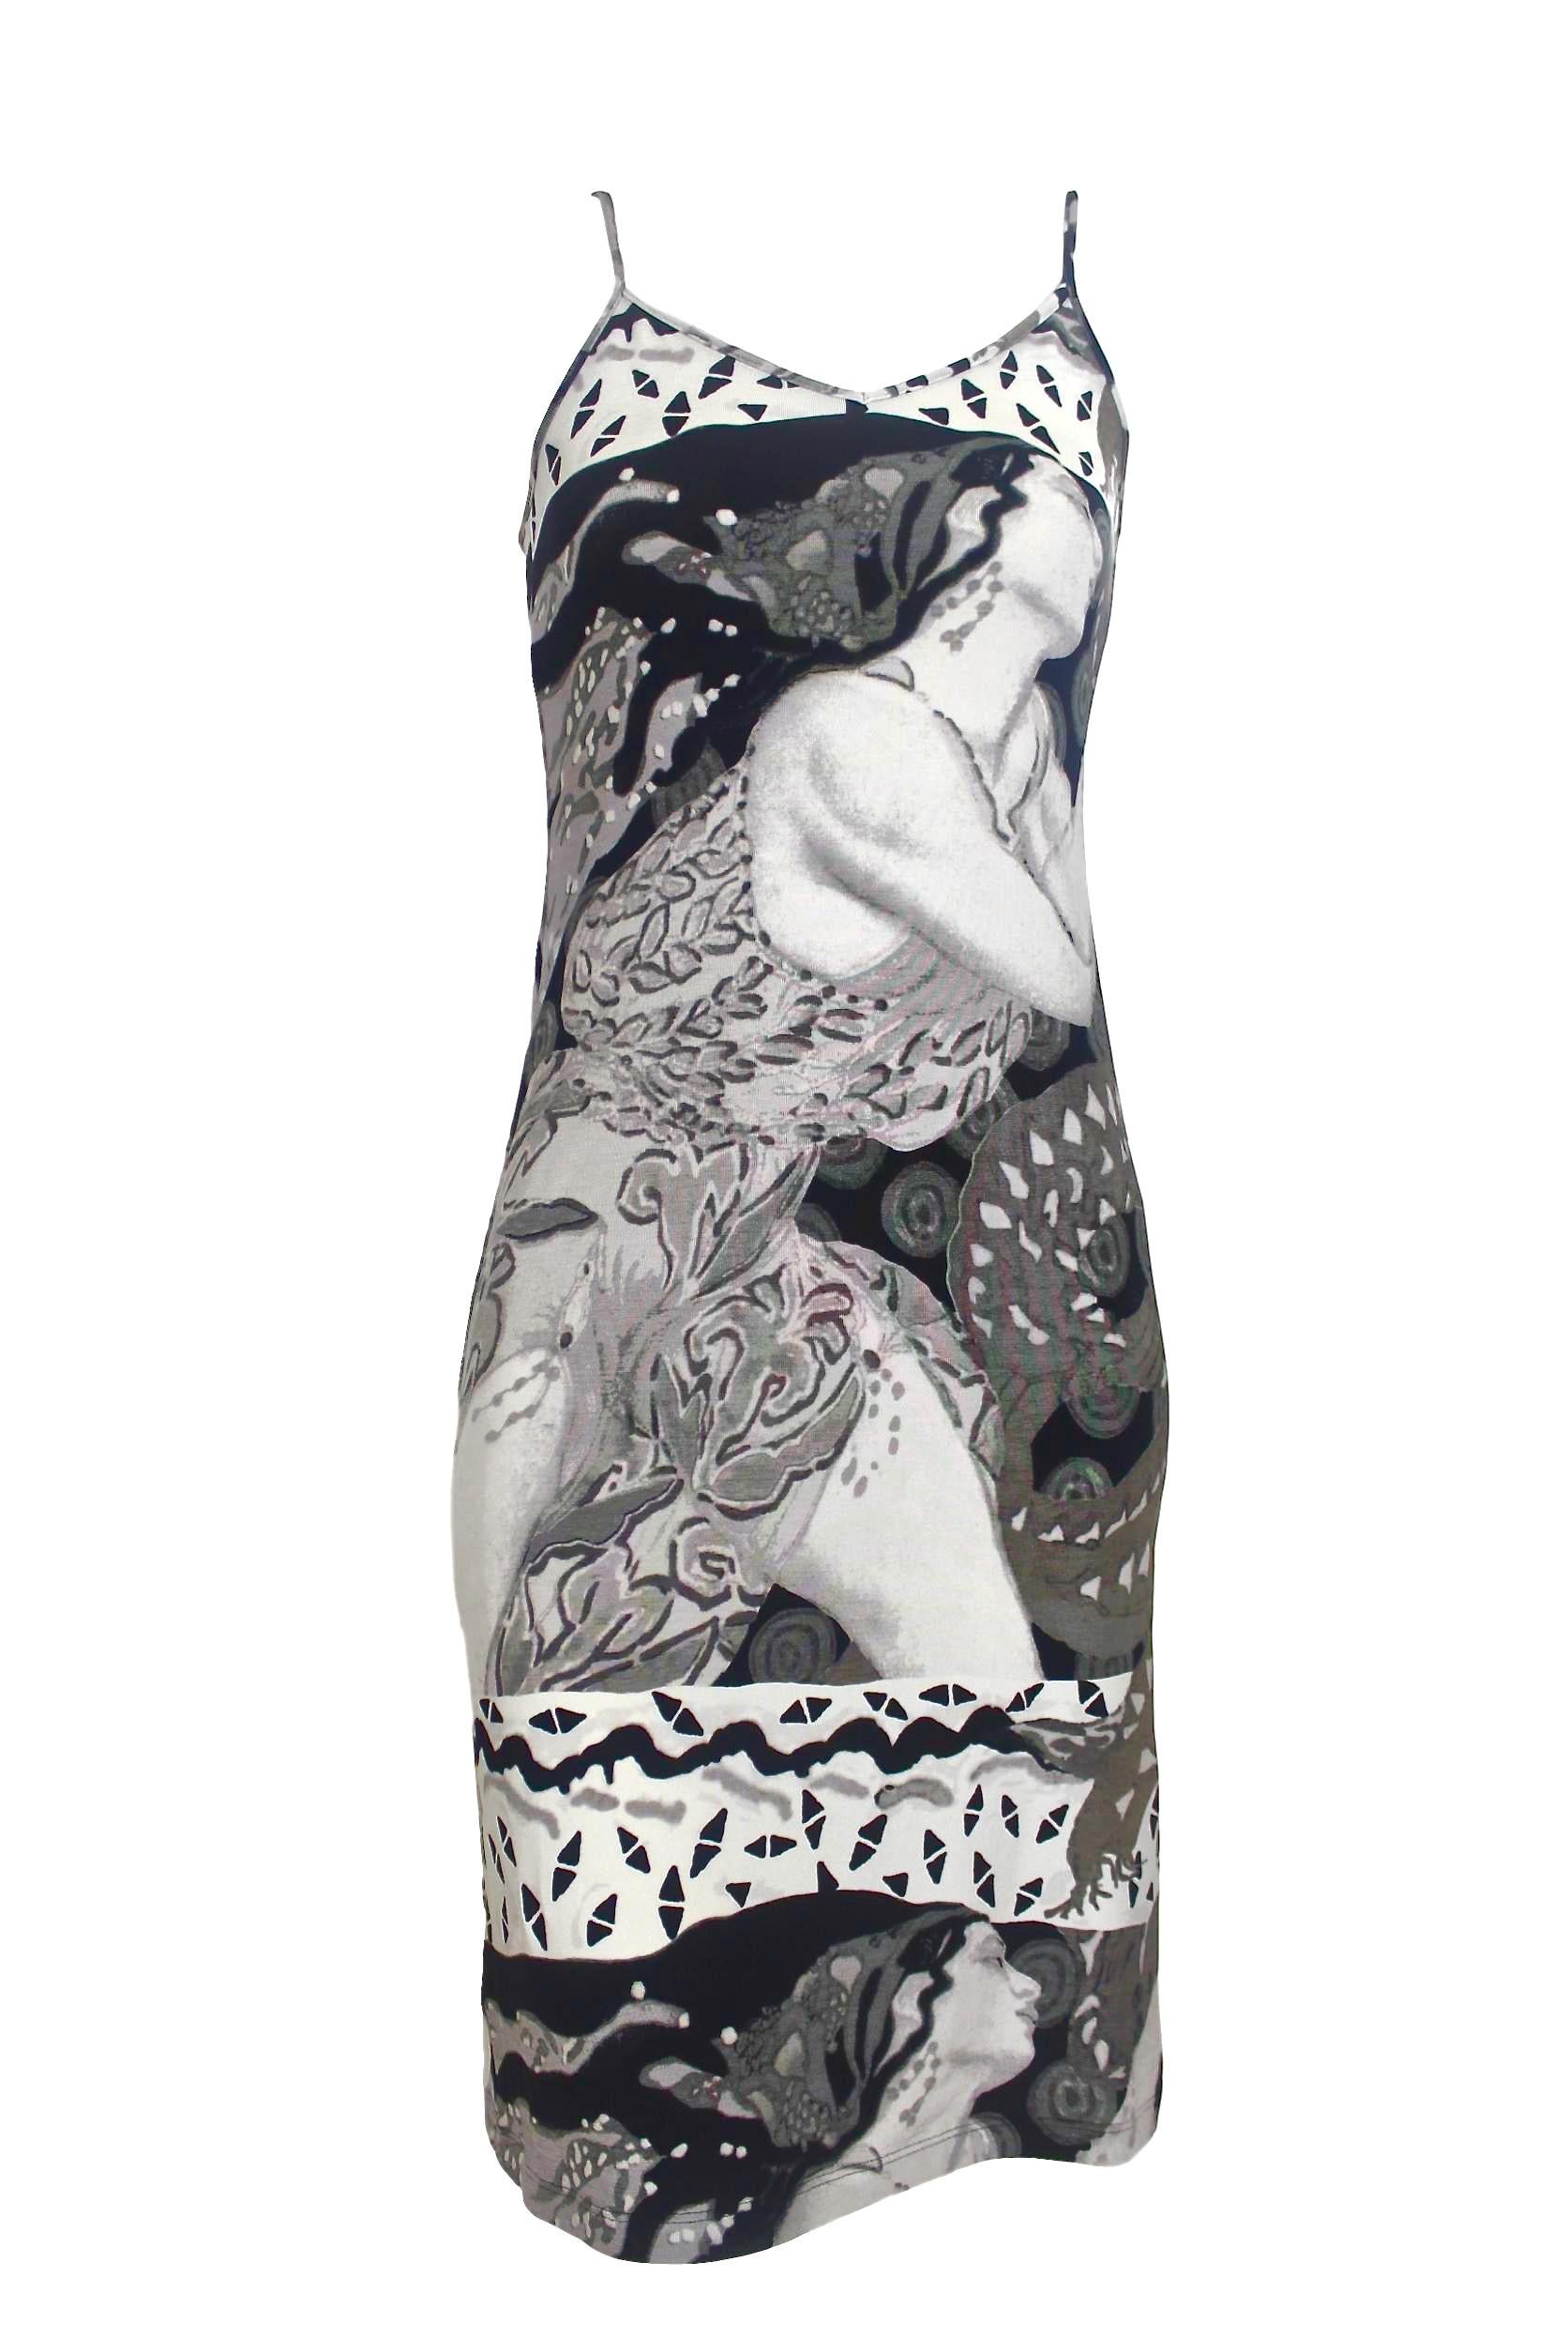 Jean paul Gaultier 'Erte' Print Summer Slip Dress For Sale 1